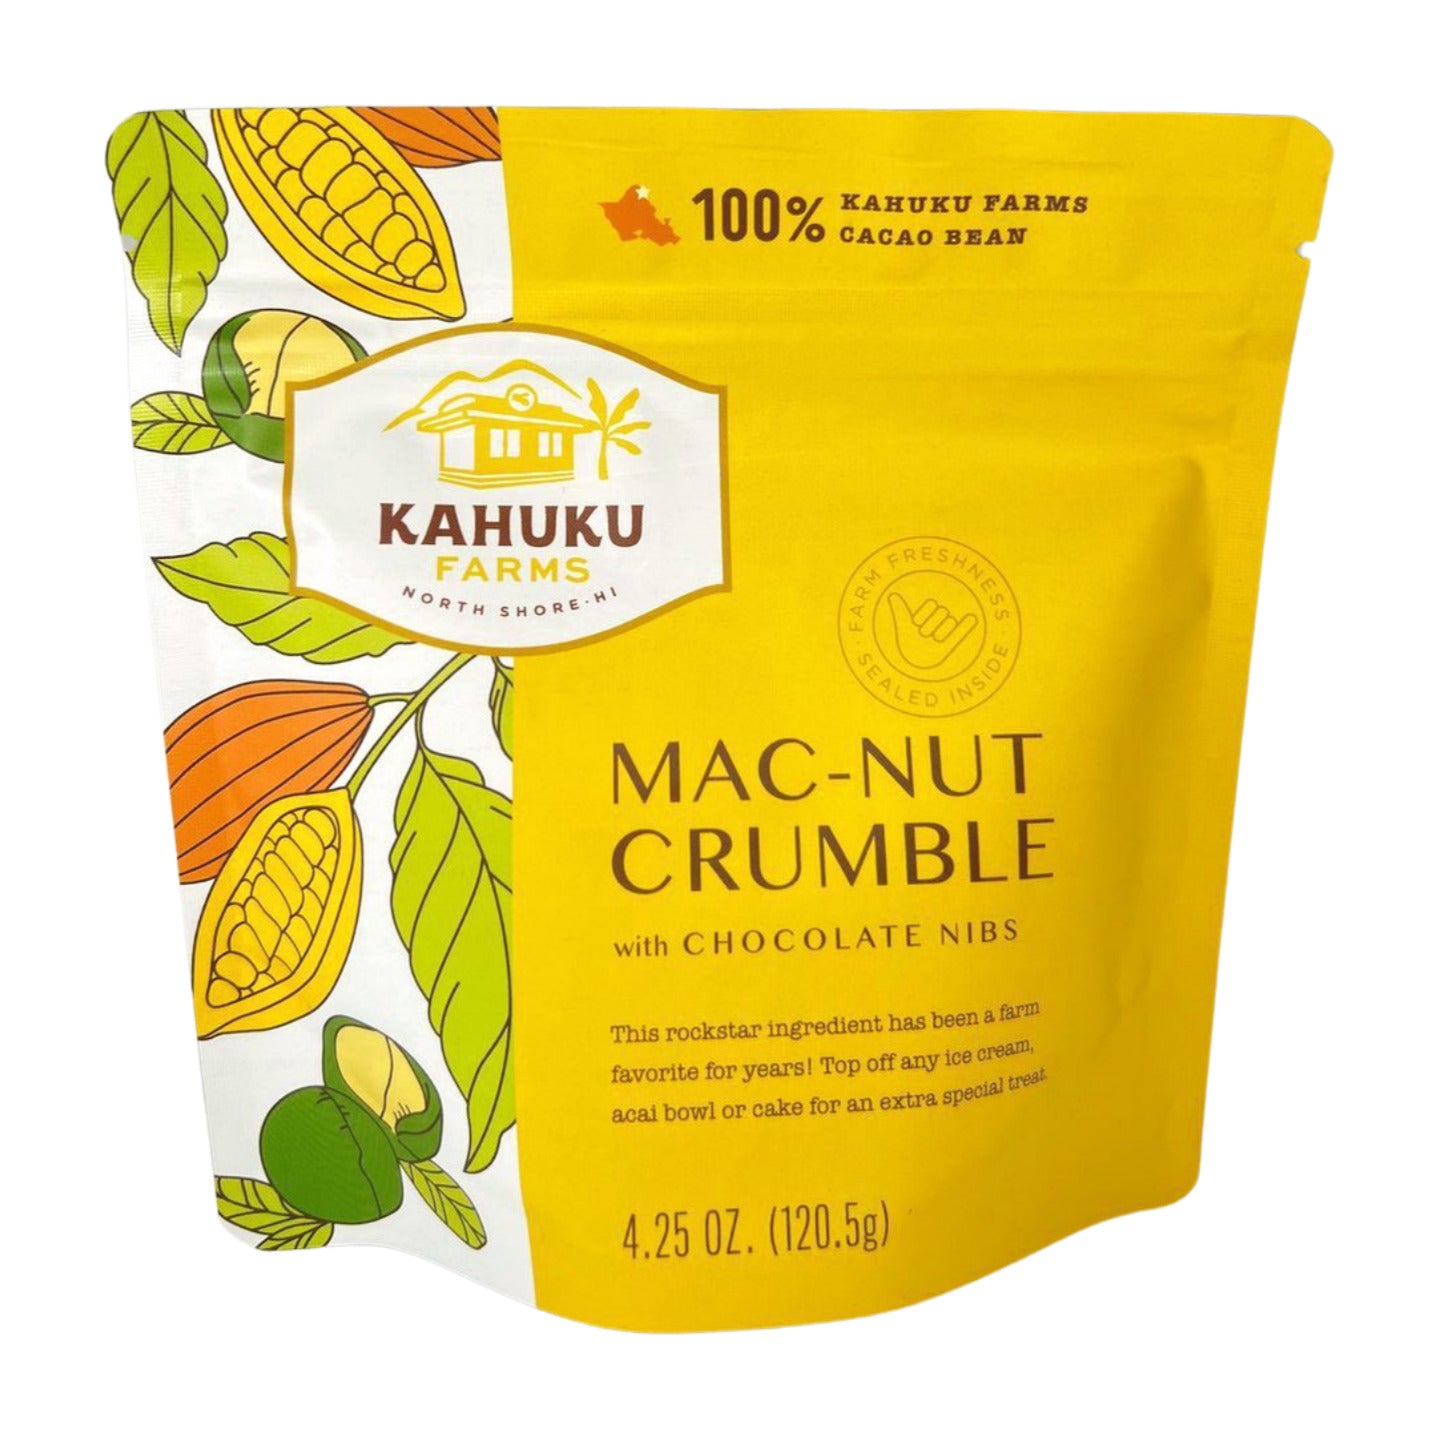 Pop-Up Mākeke - Kahuku Farms - Mac-Nut Crumble - Front View